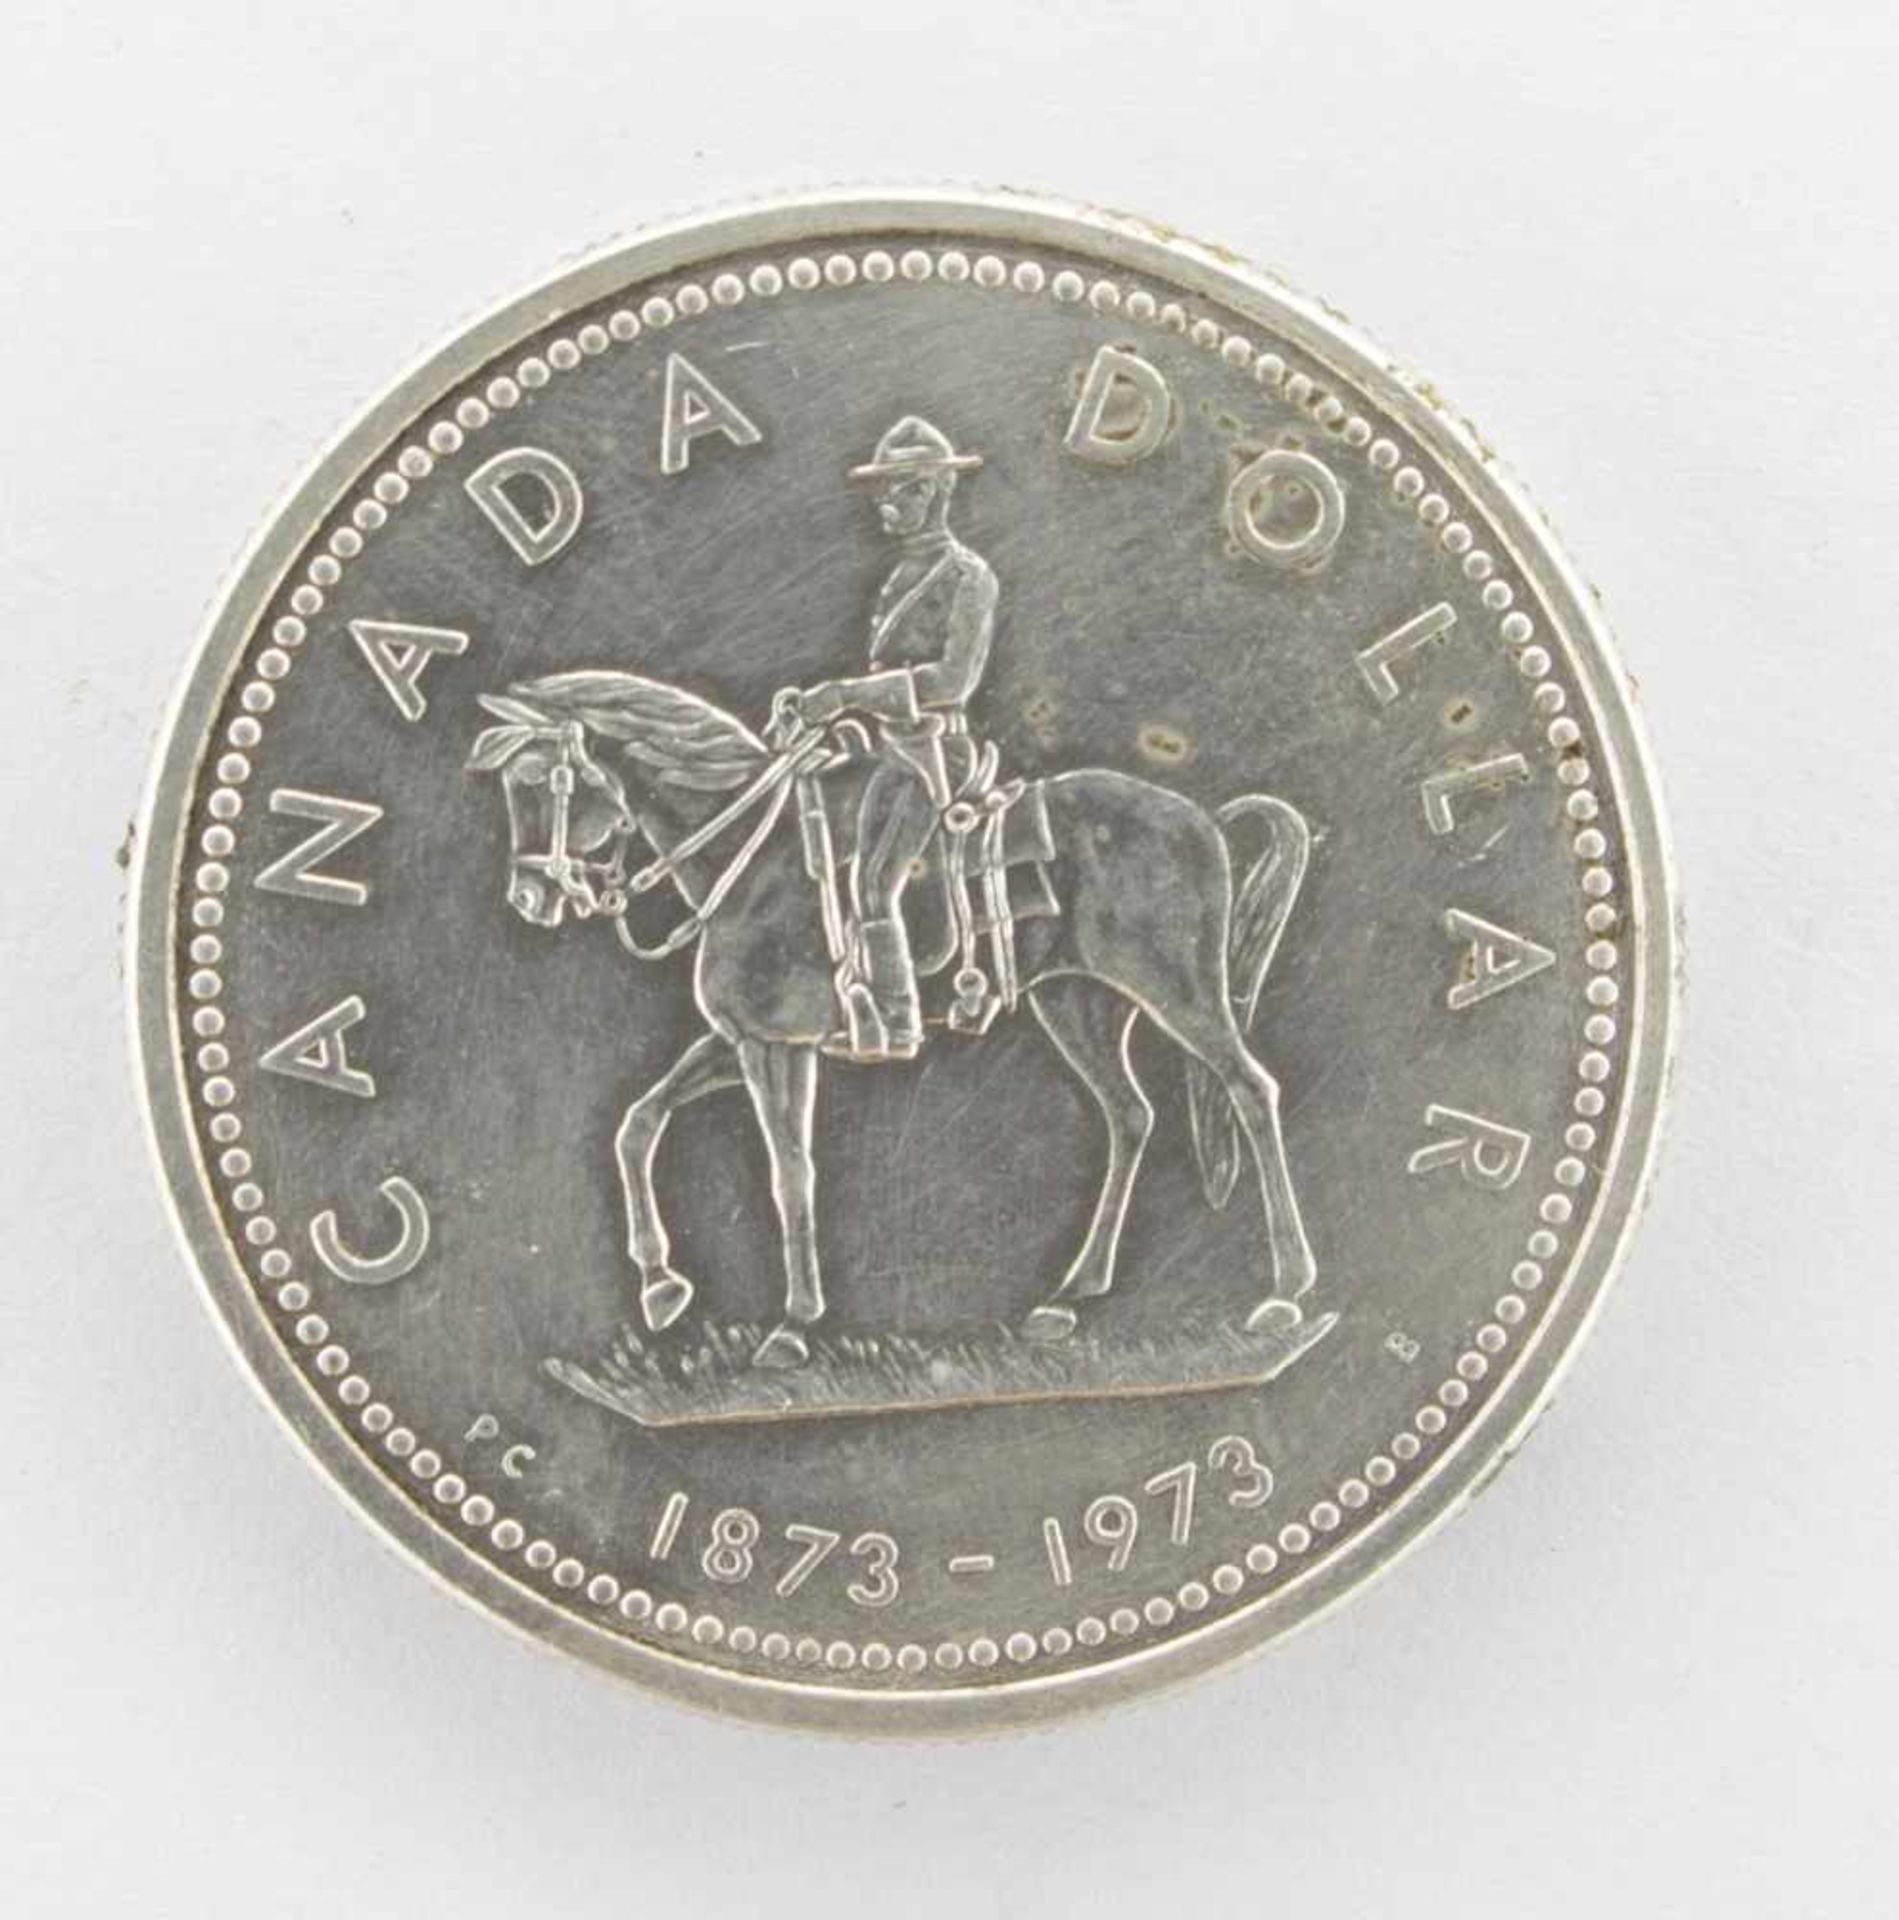 1 DollarCanada 1973, Maunted Police, Silber, stgl. - Bild 2 aus 2